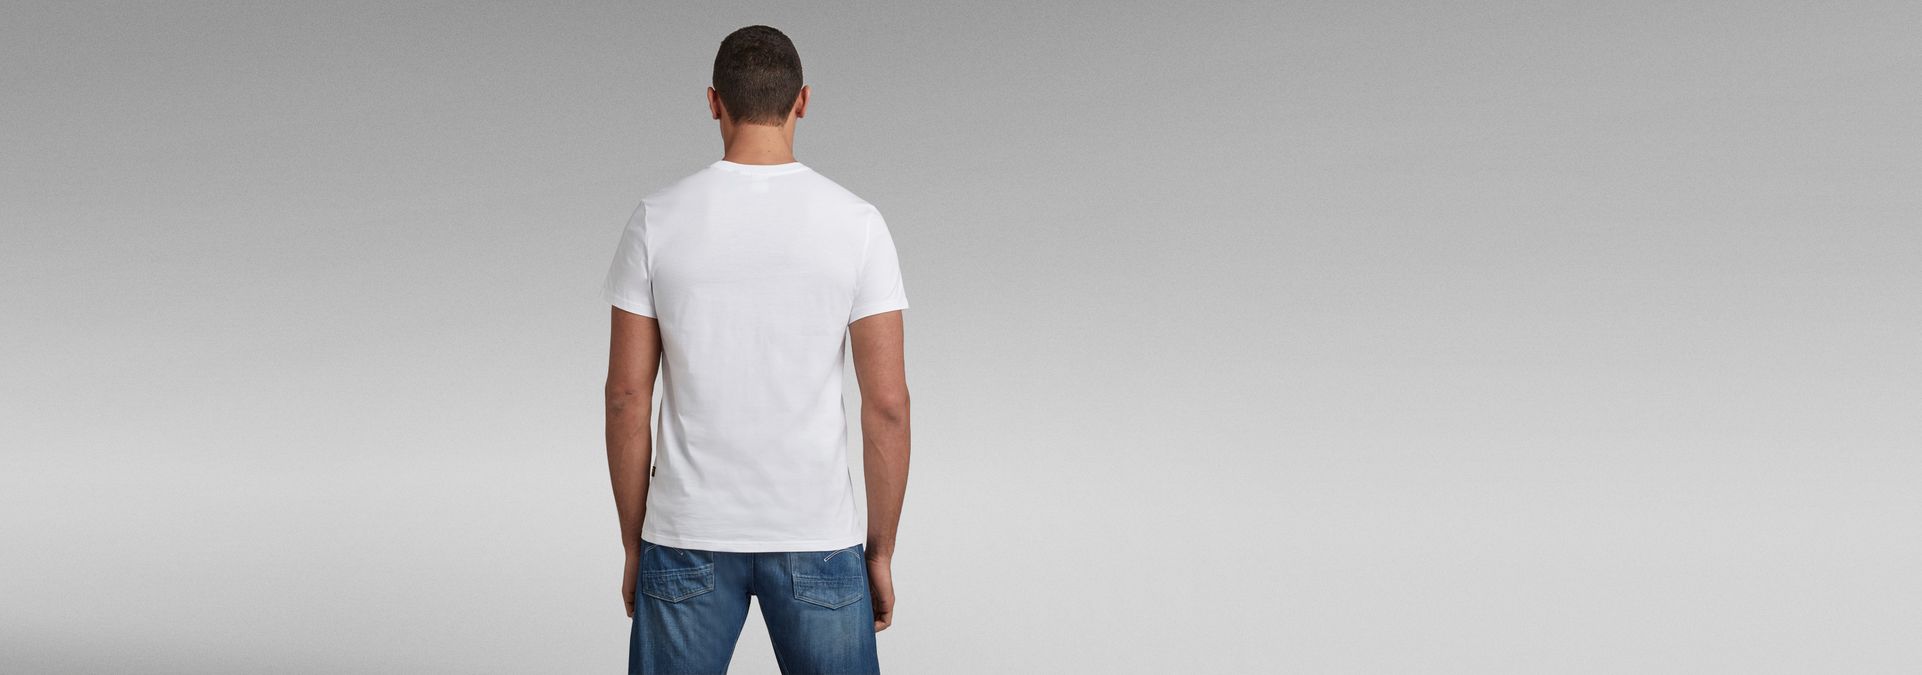 Homme Tshirt Blanc All You Need Is T-shirt soil 